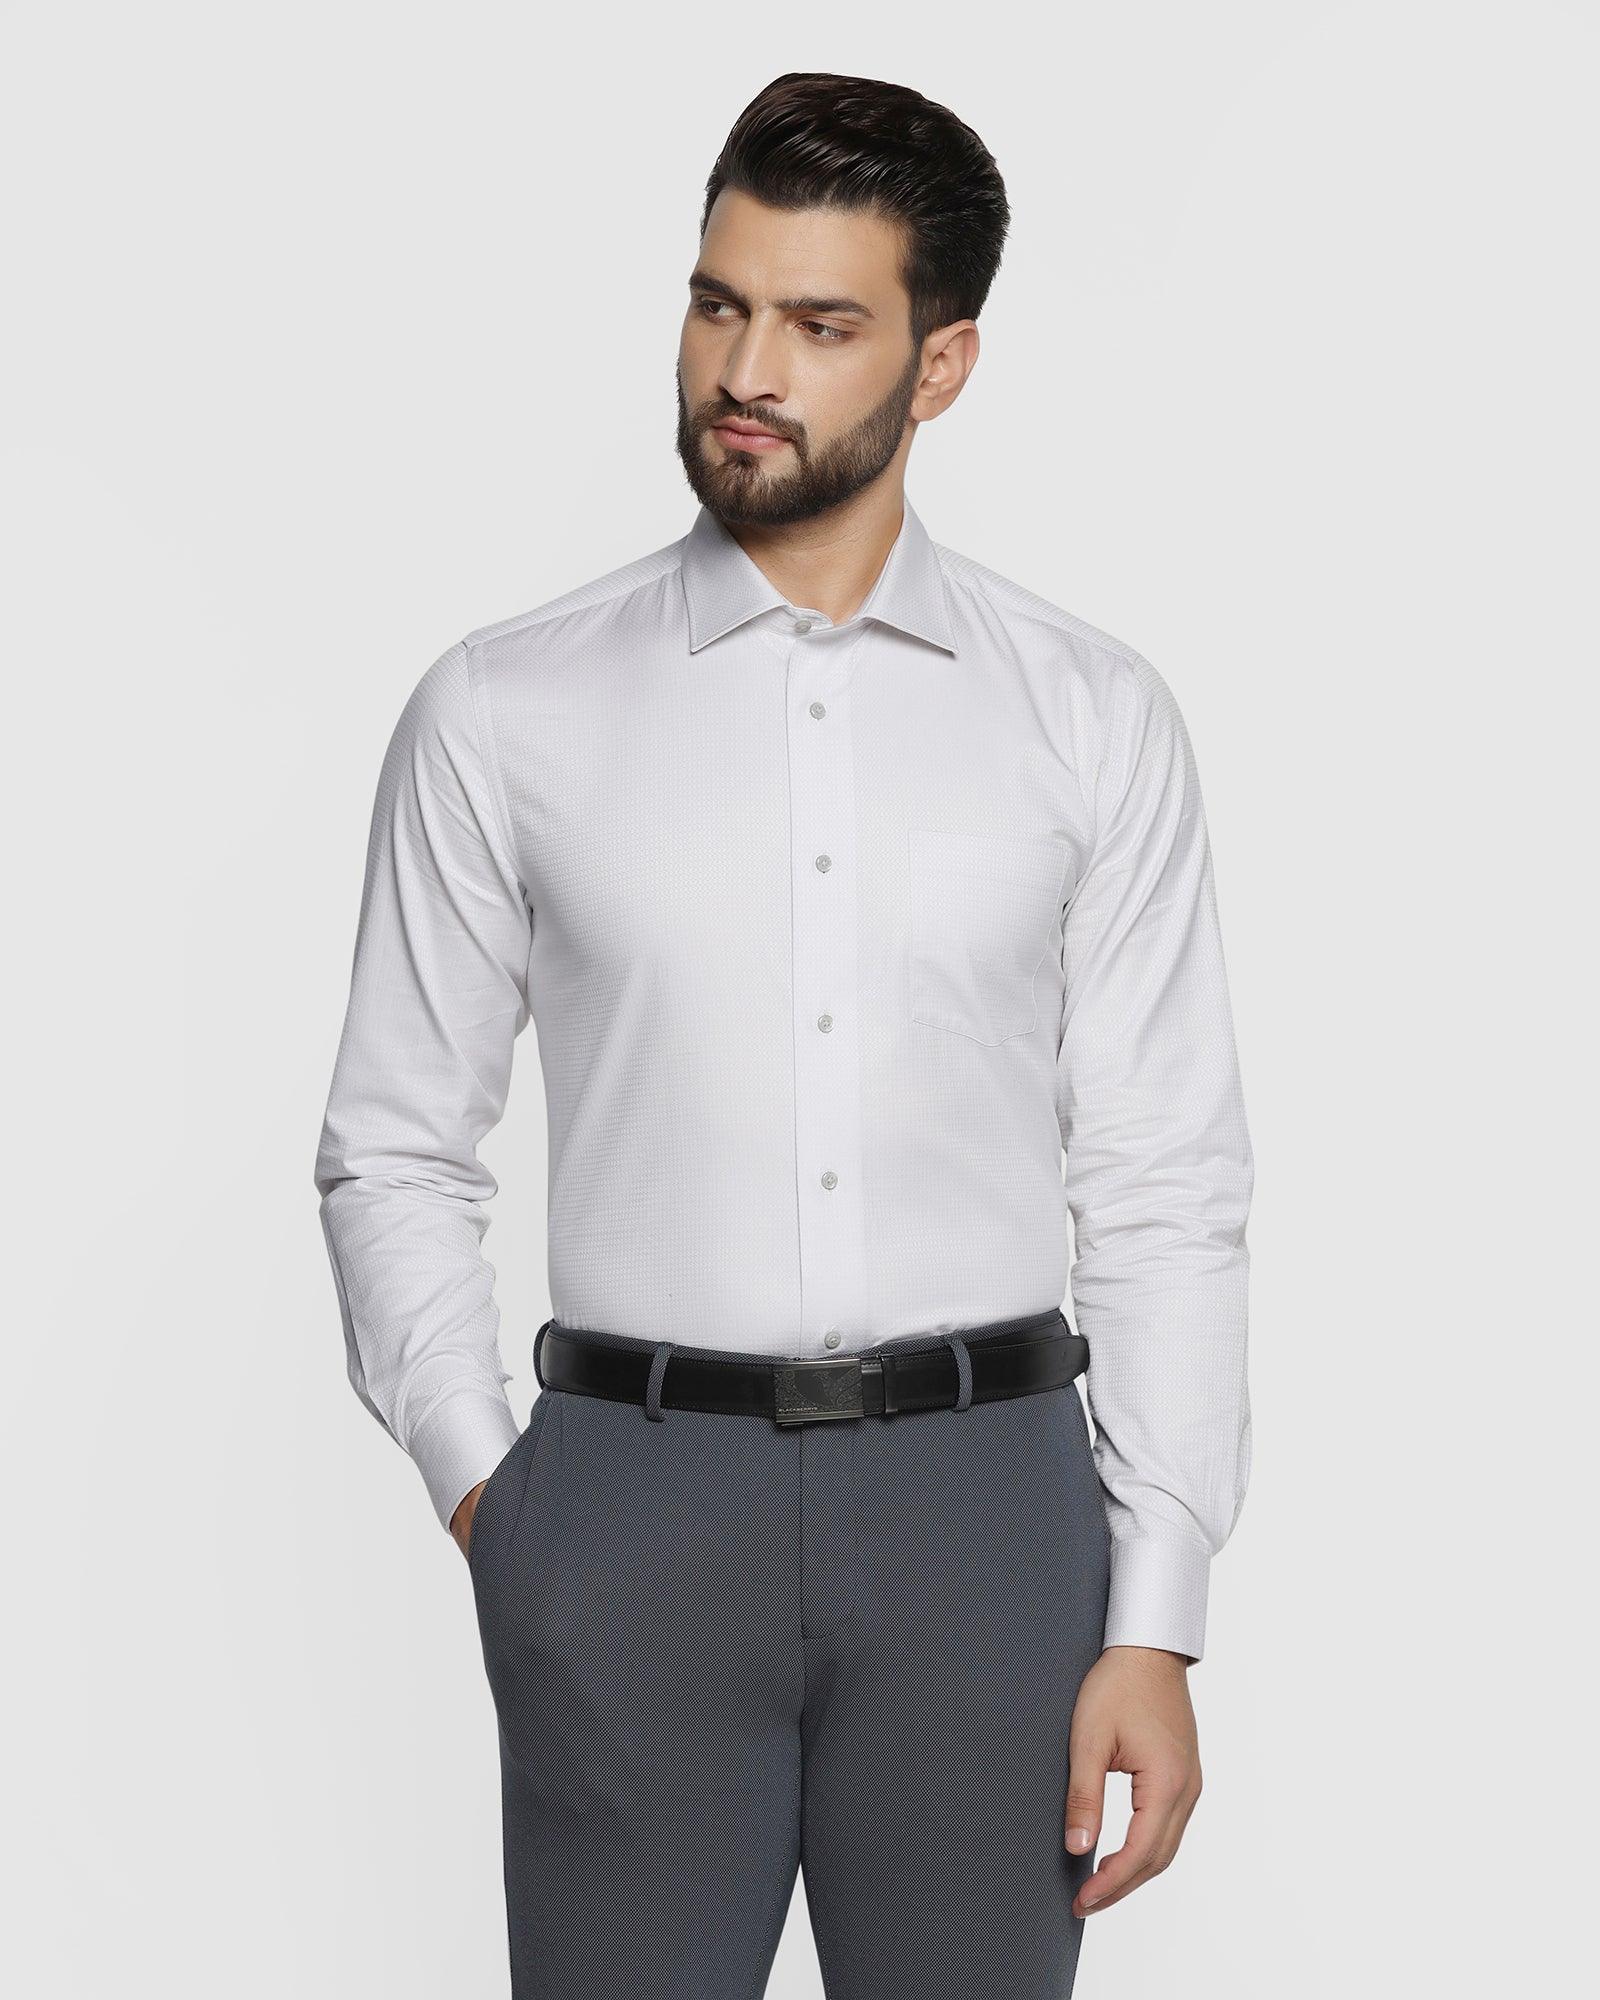 Textured Formal Shirt In Light Grey (Gibbs)